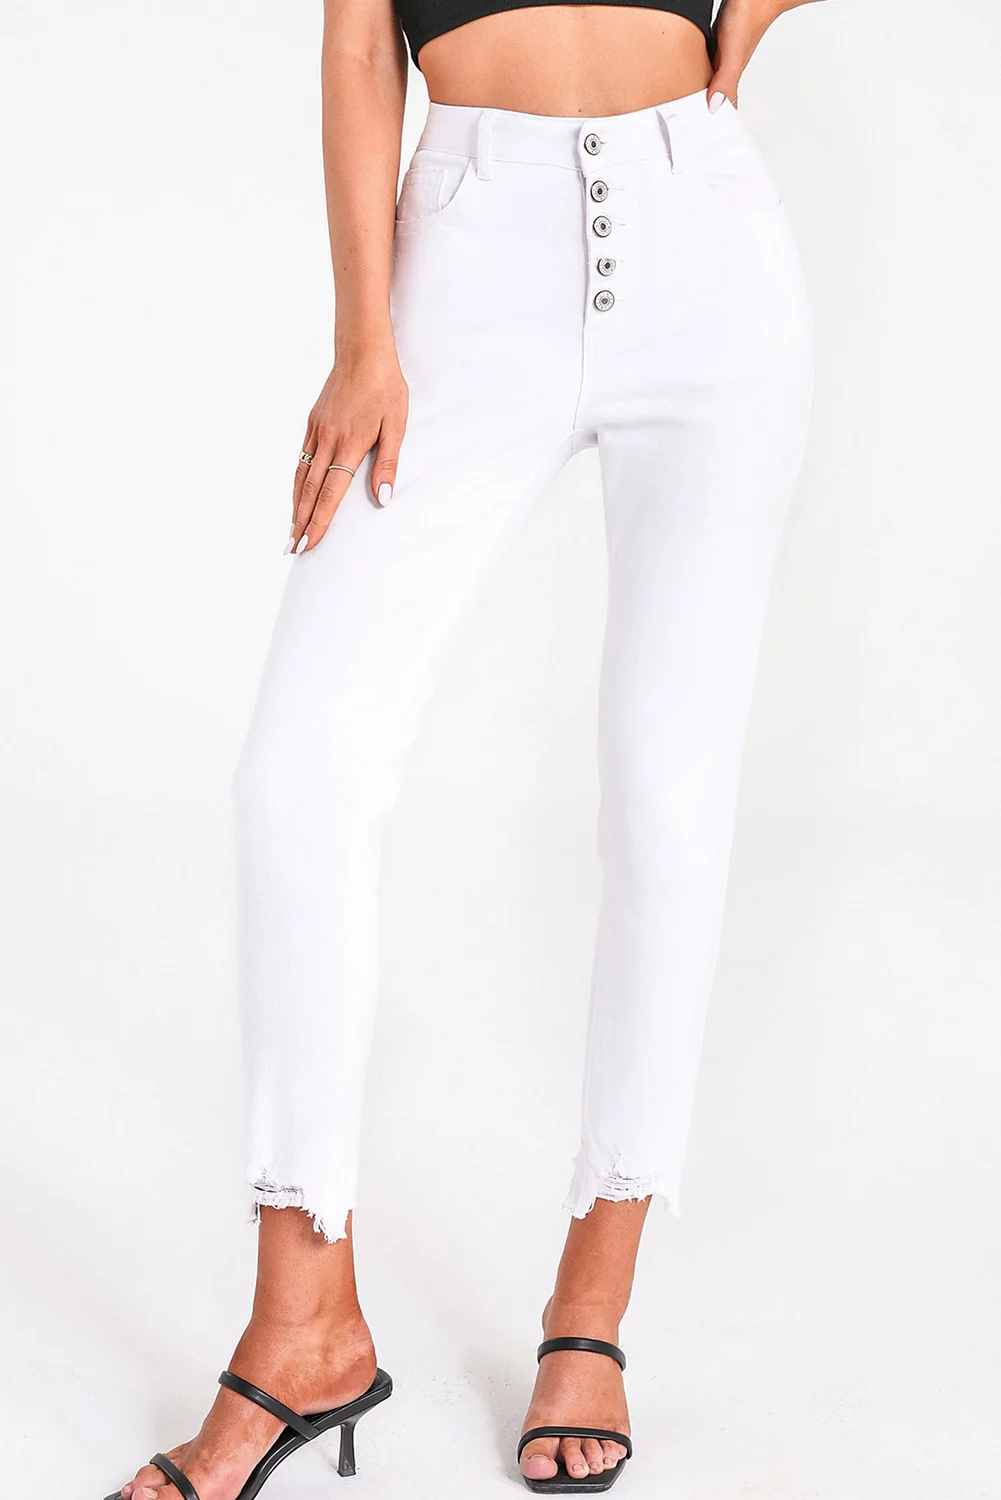 Dear-Lover New Arrivals Denim Pants Women Solid Color High Waist Harem Designer Ladies White Jeans